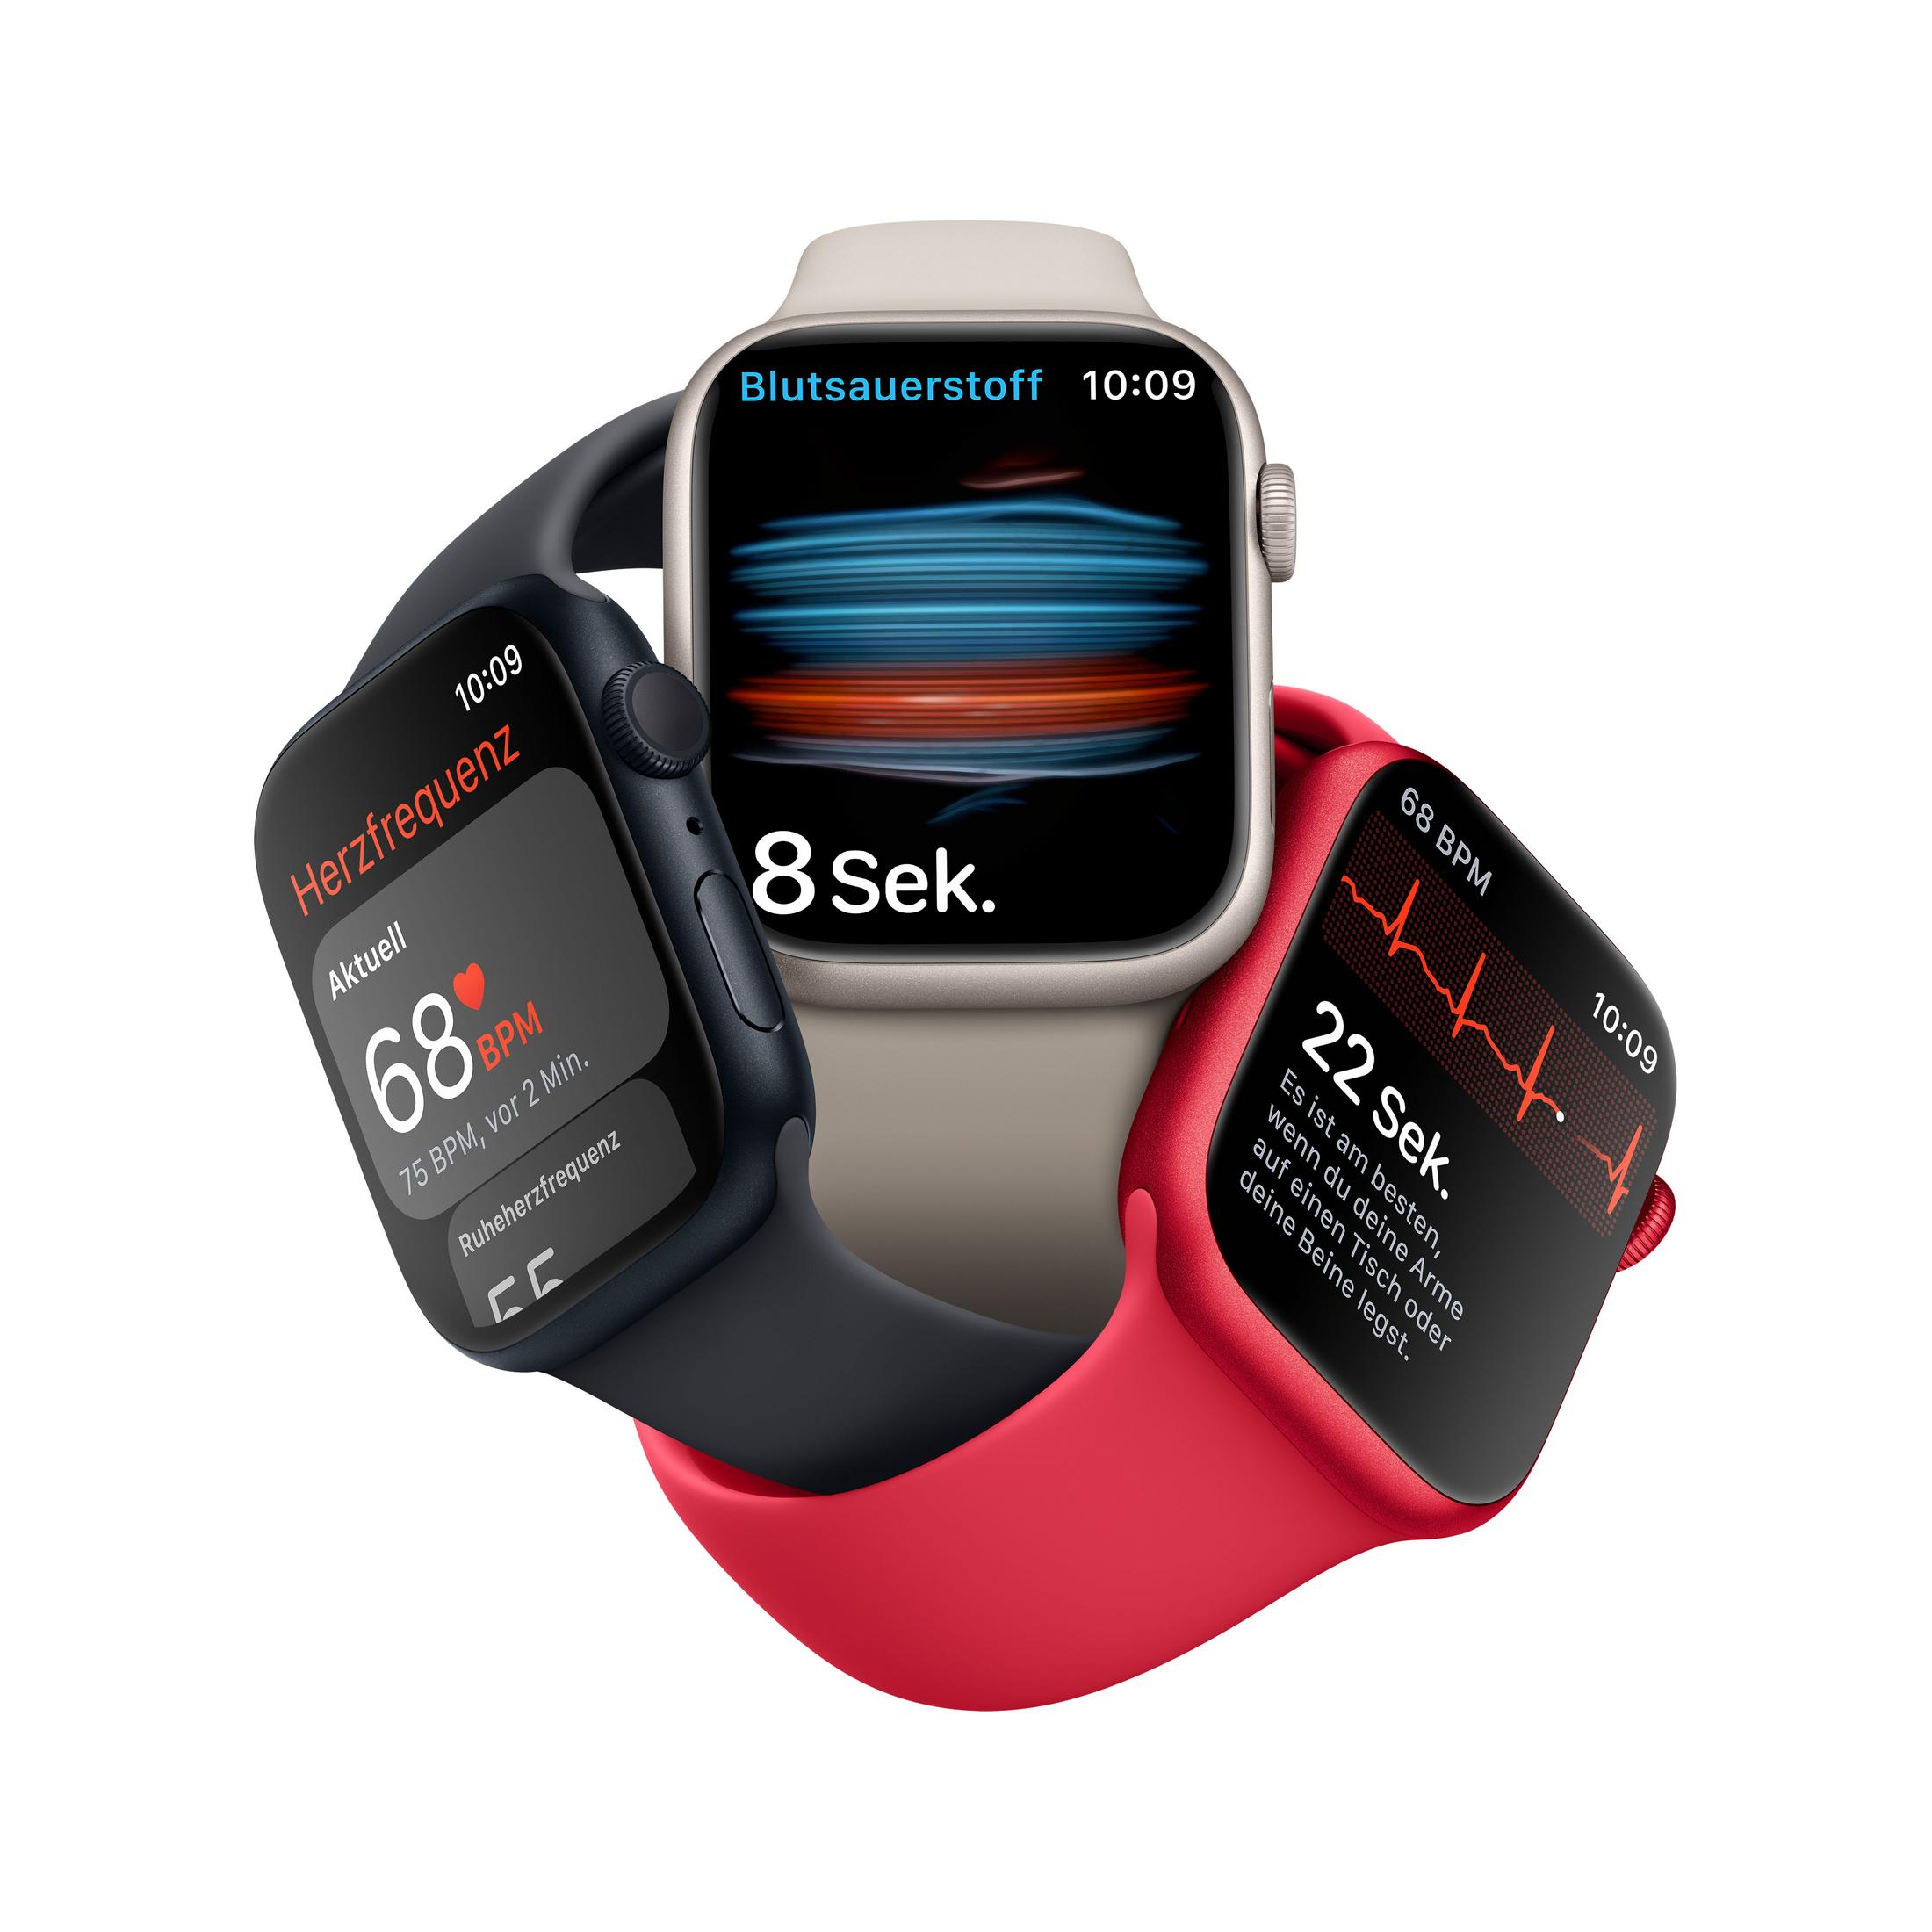 APPLE S8 GPS 41 RED Gehäuse: Smartwatch - (PRODUCT)RED, W ALU mm, 200 REG Armband: Aluminium Fluorelastomer, SPORT RED (PRODUCT)RED 130